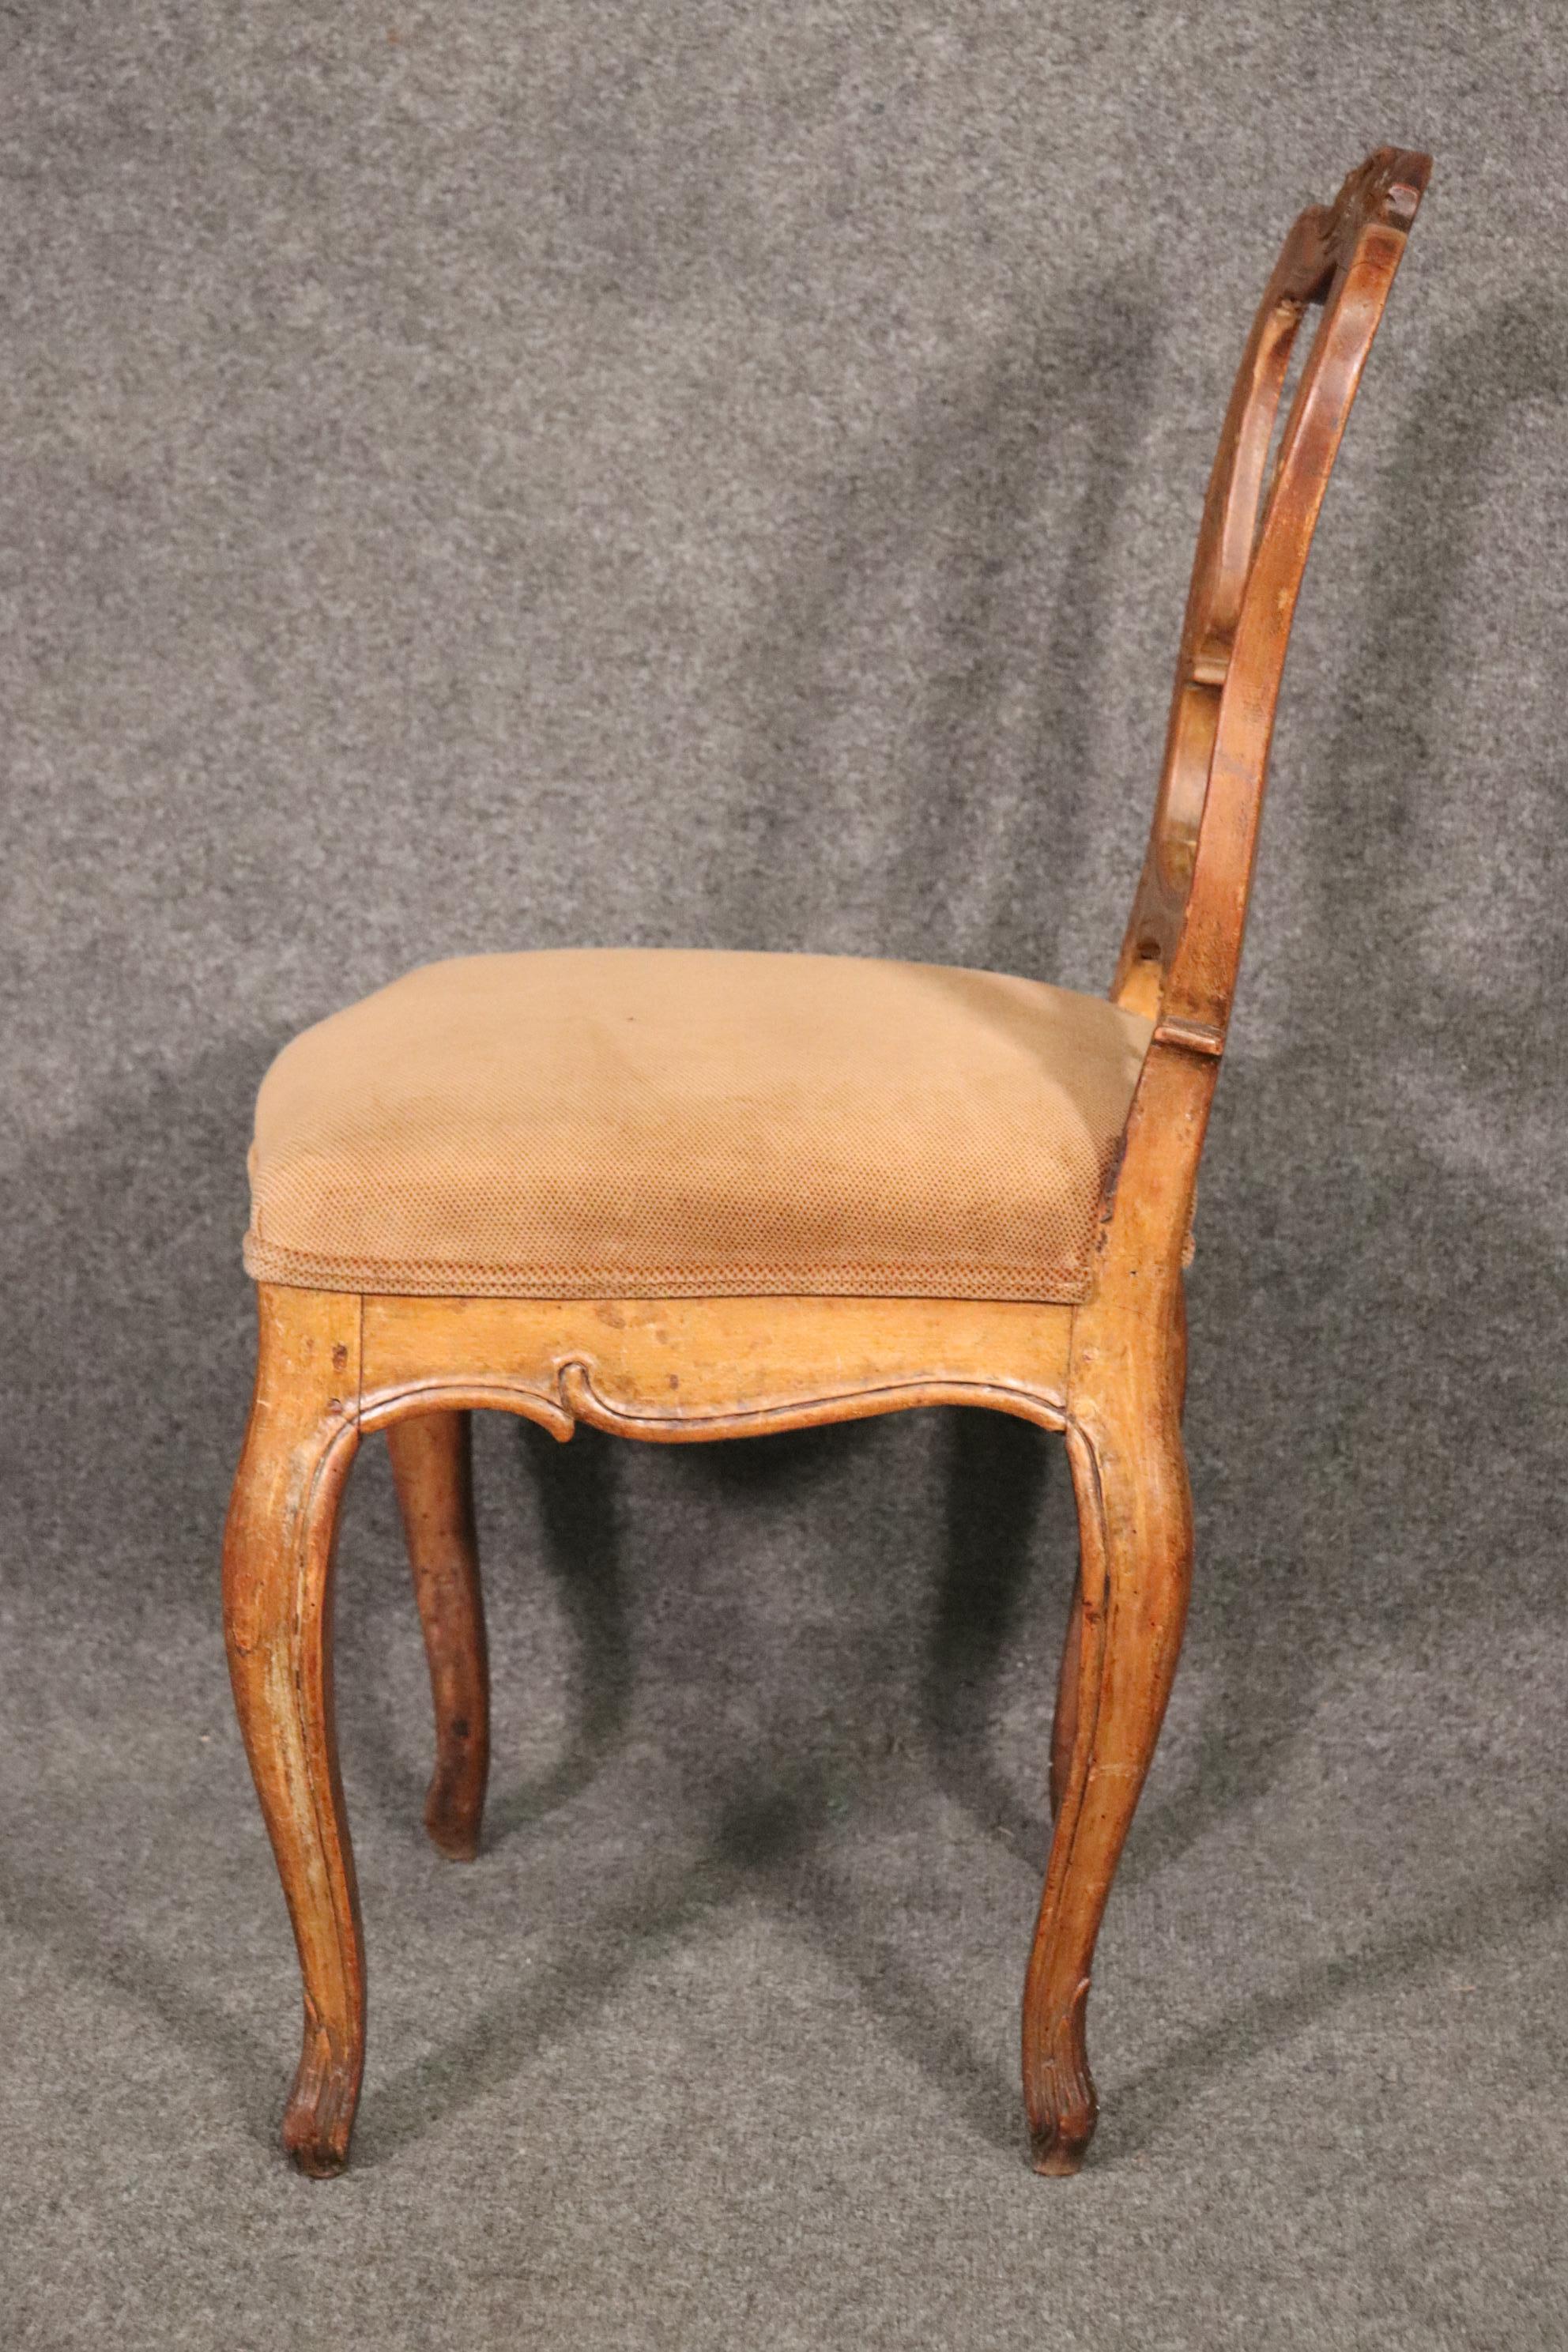 Period 1770s Era Italian Provincial Walnut Desk or Vanity Chair For Sale 2